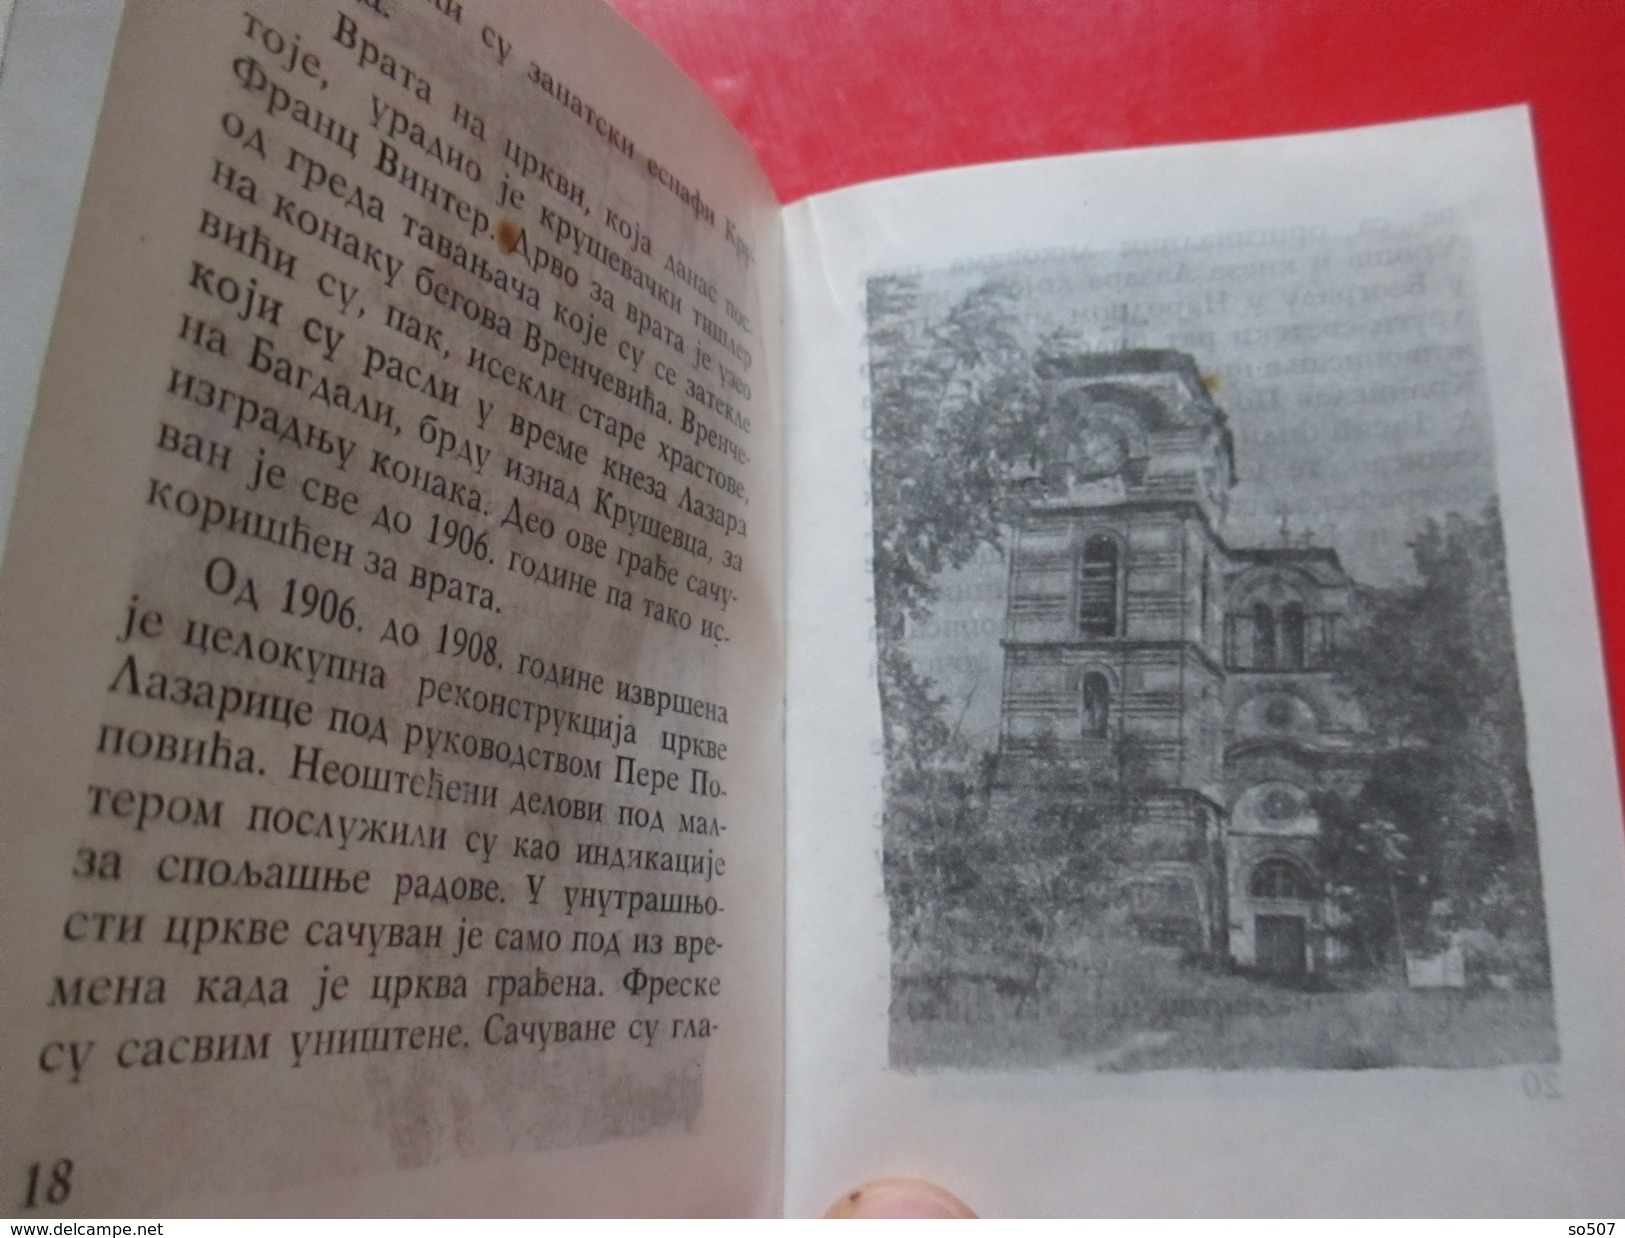 Small Book About Orthodox Monastery,Church "Lazarica" In Krusevac-Lenguage:Serbian